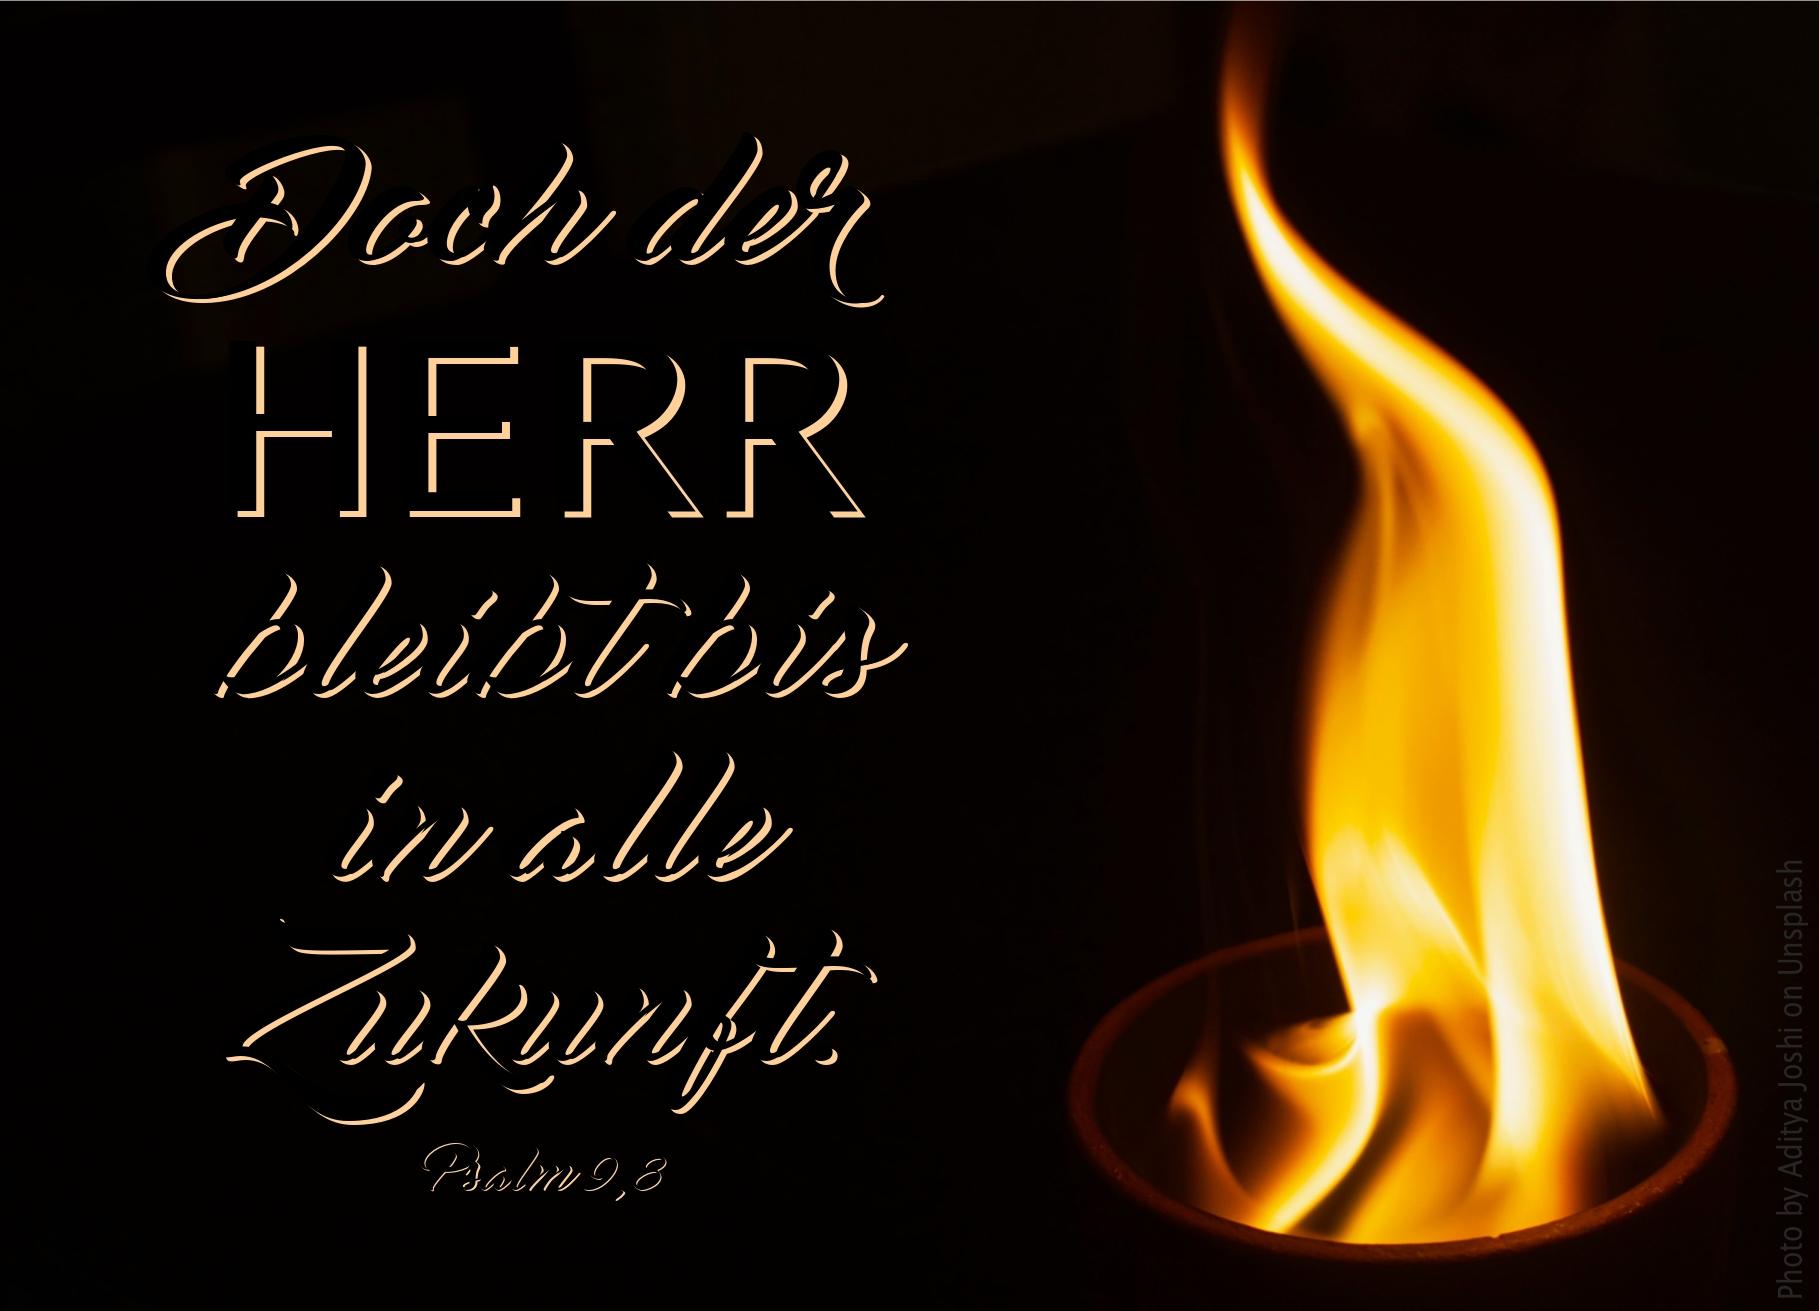 alt="Feuerflamme_erwartet_bibelhoerbuch_geburt_von_isaak"